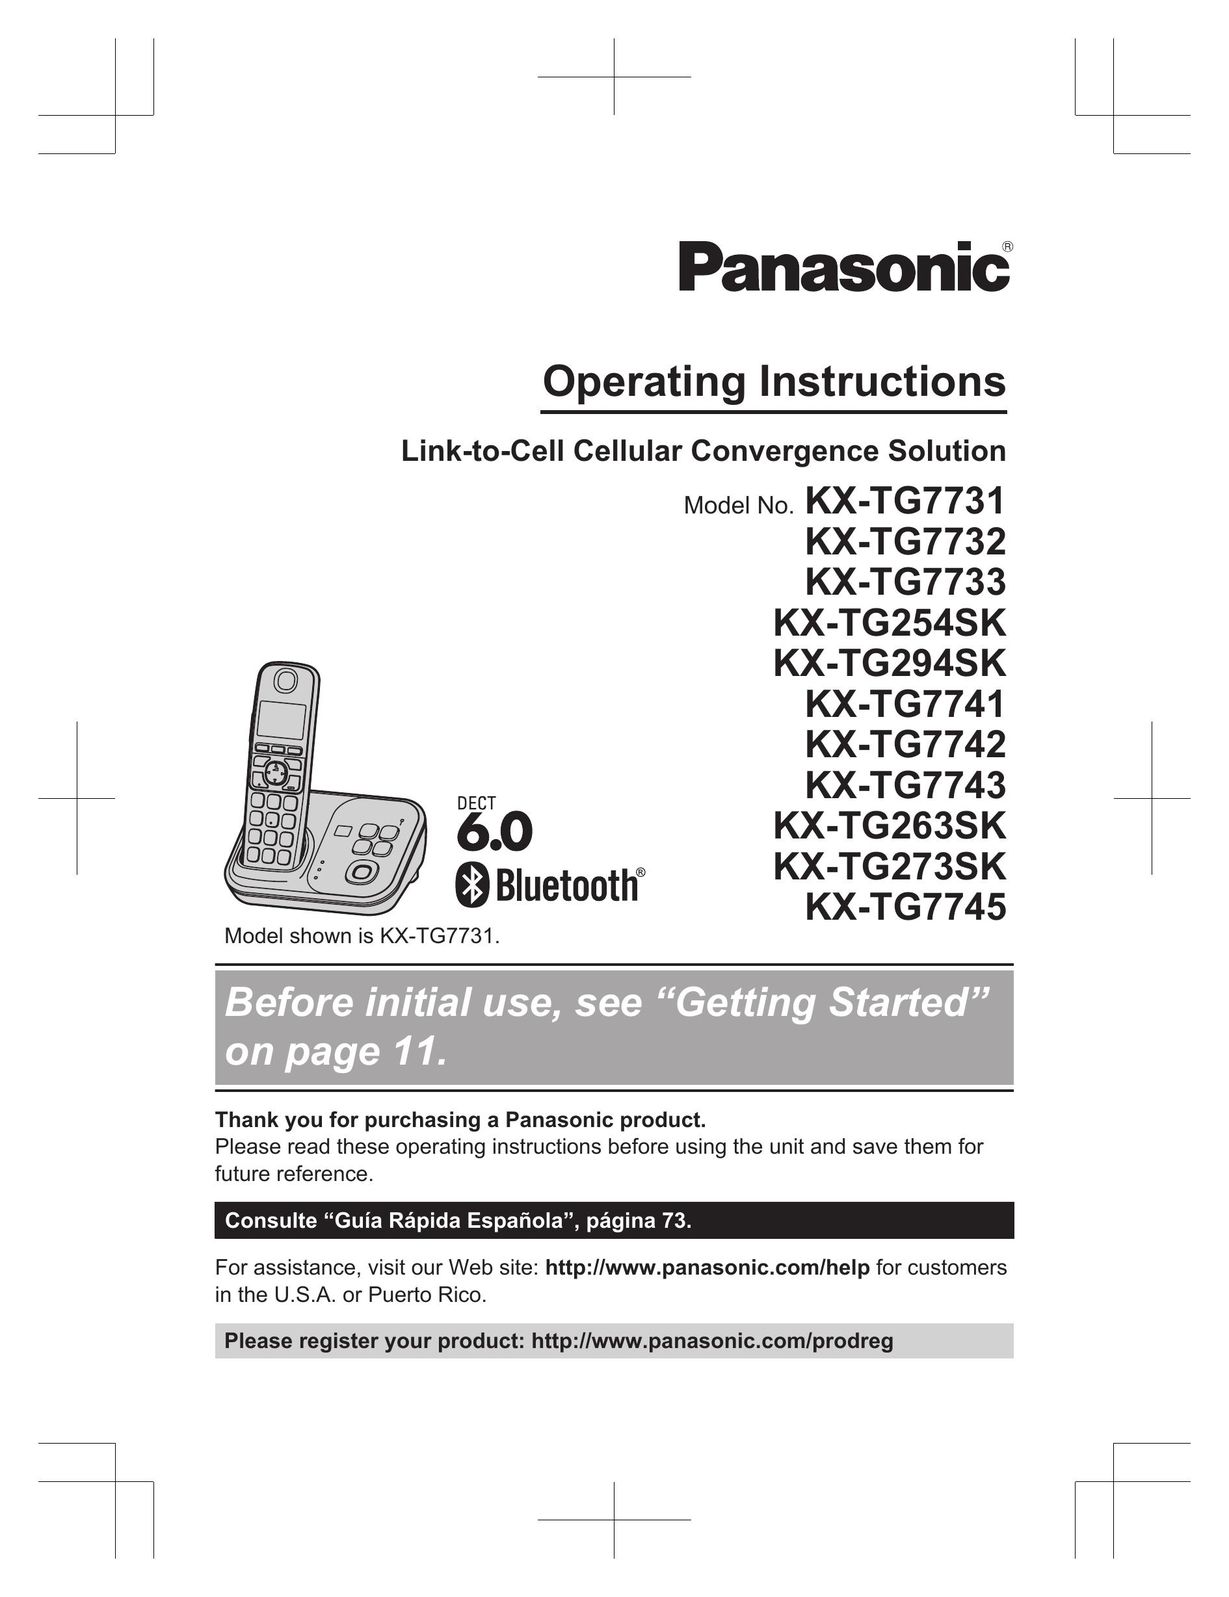 Panasonic KX-TG7741 Carrying Case User Manual